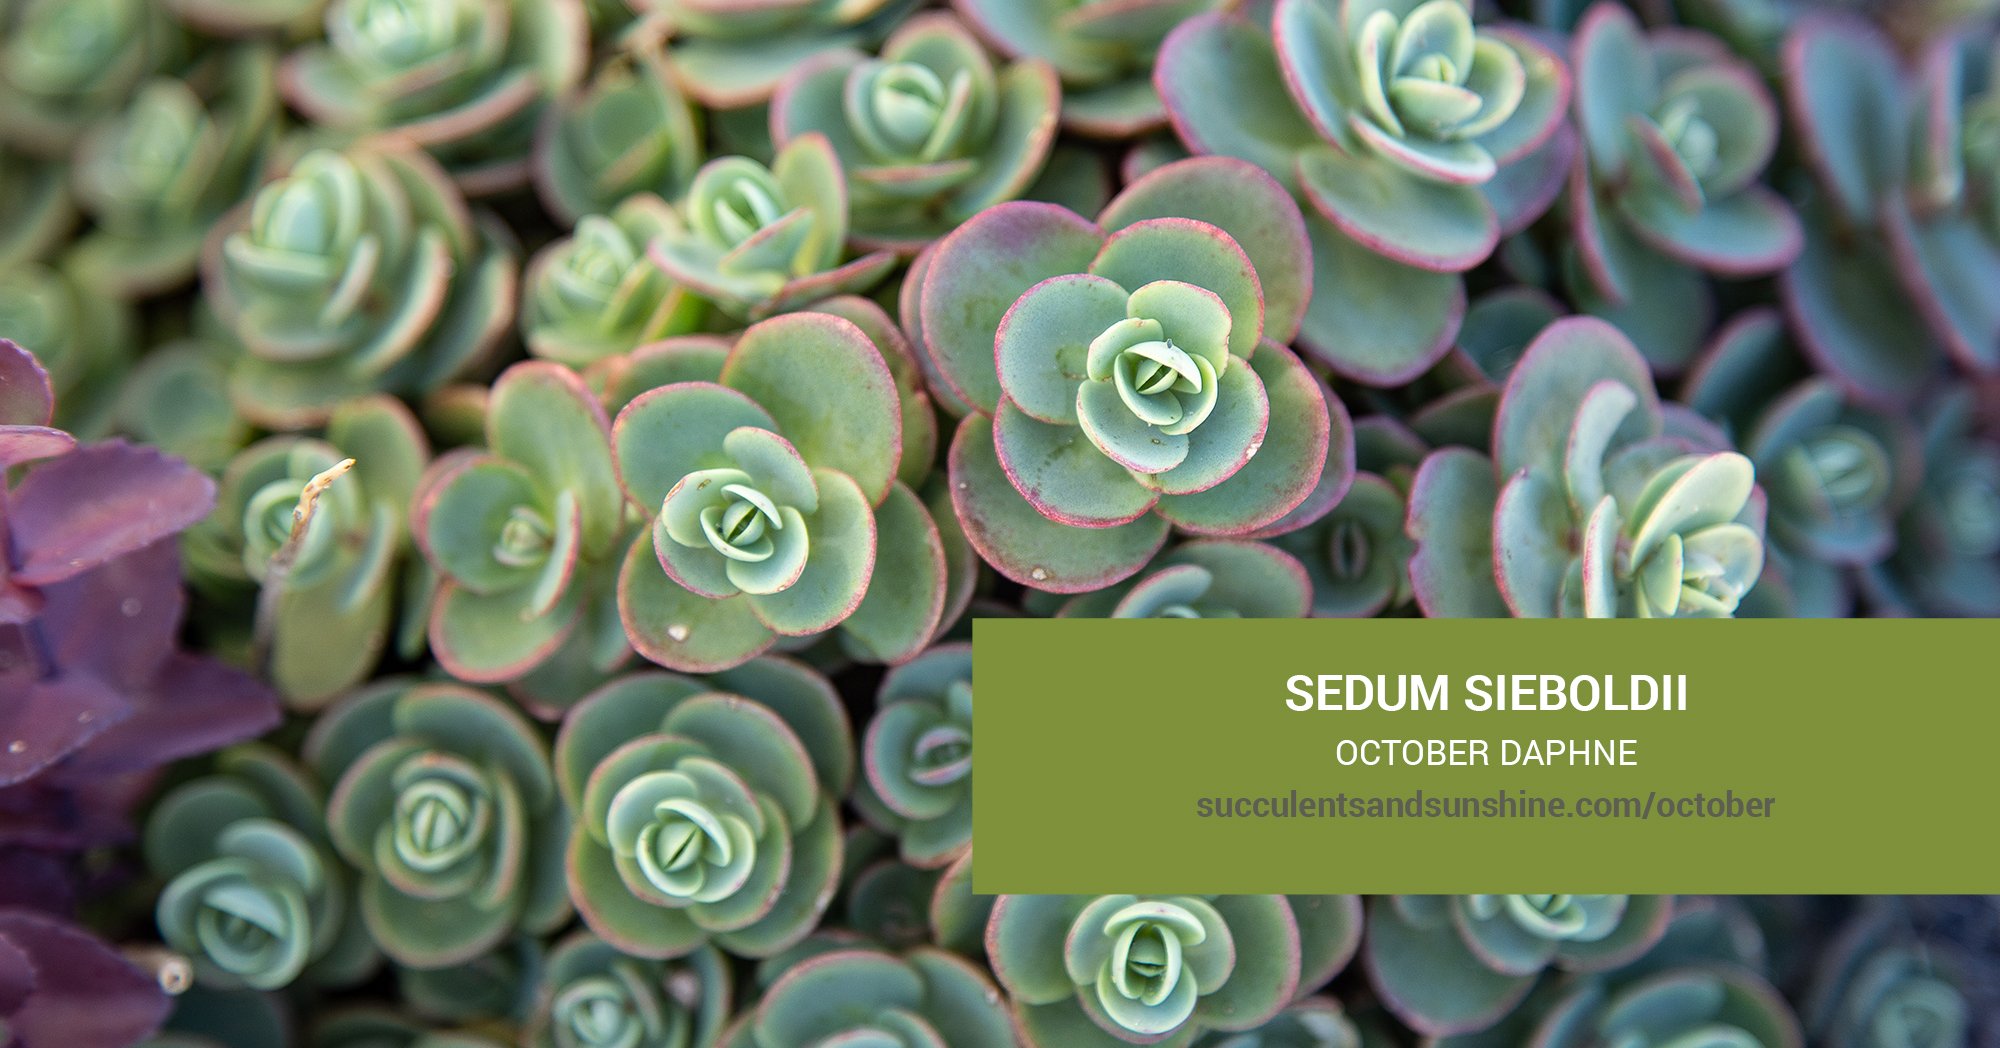 General Care for Sedum sieboldii “October Daphne”